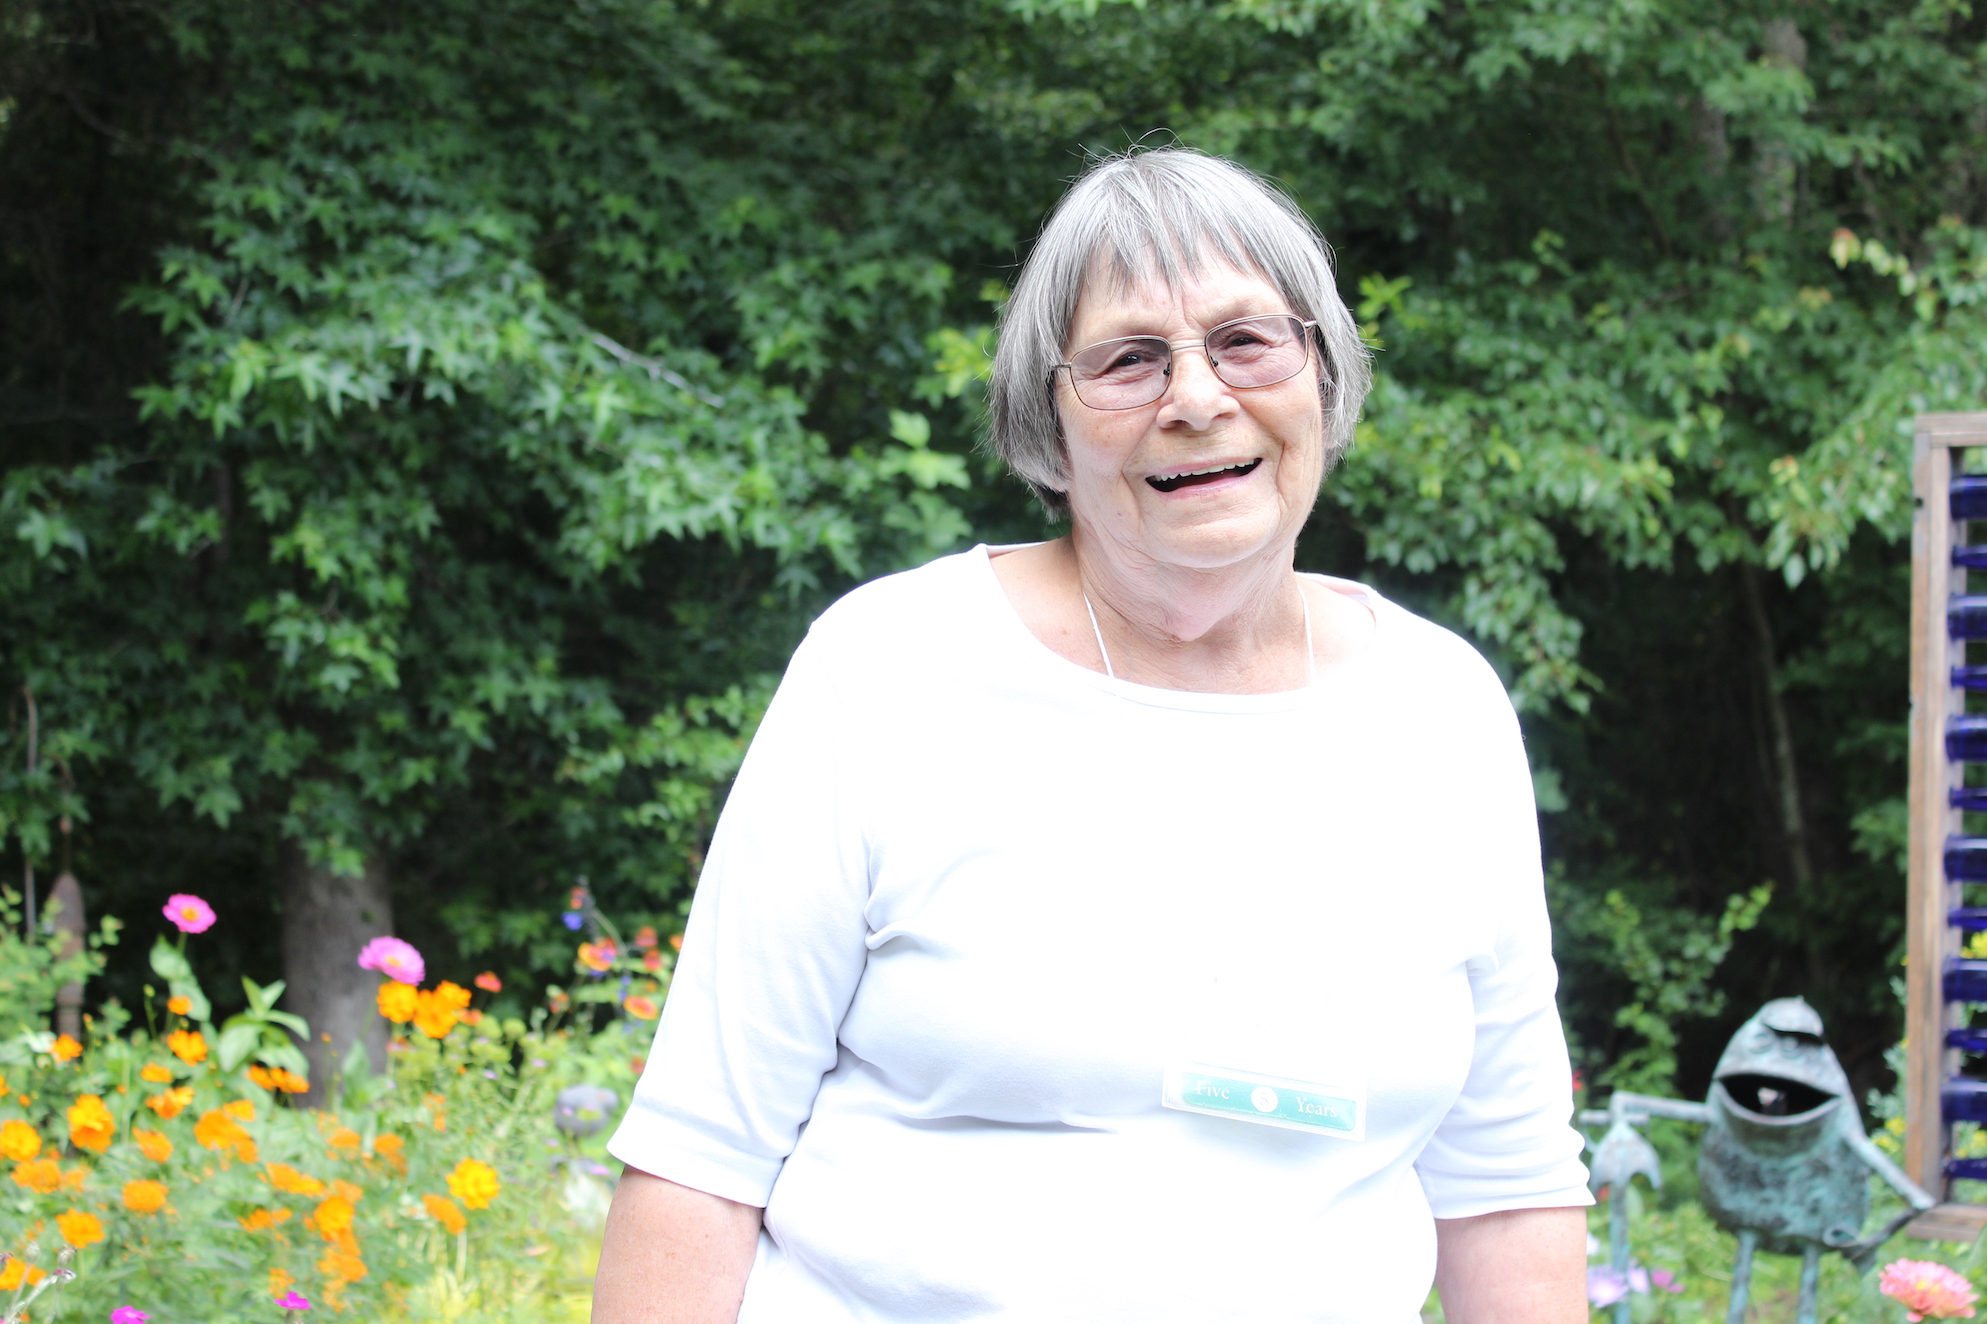 Wolary Garden: Becky revels in her compact garden refuge